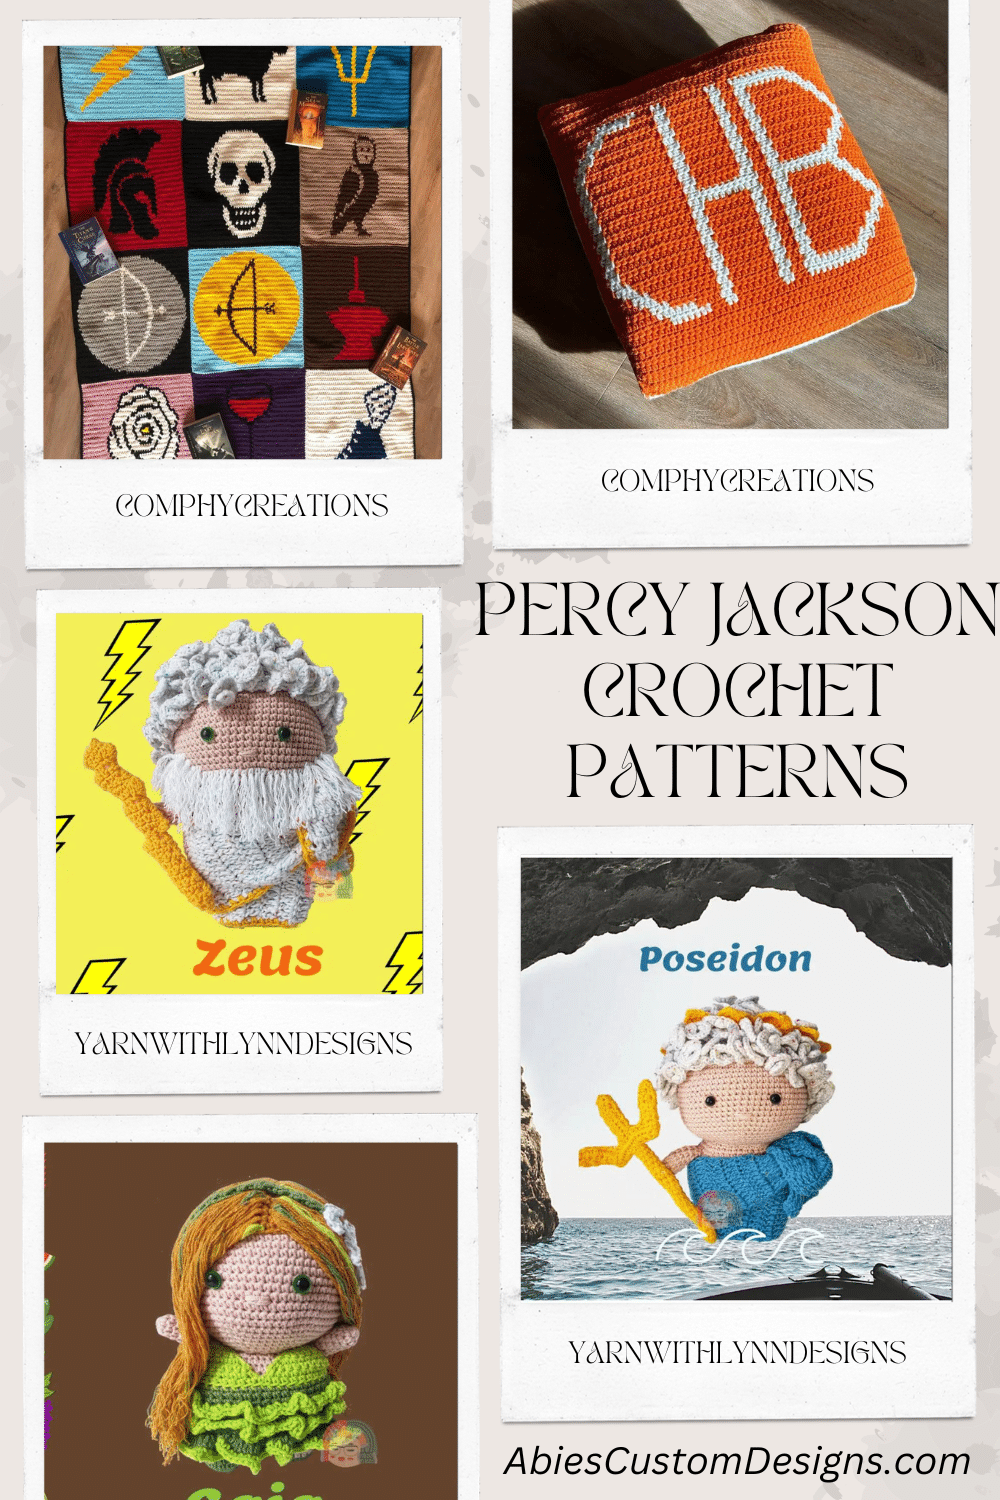 Percy Jackson Crochet Patterns